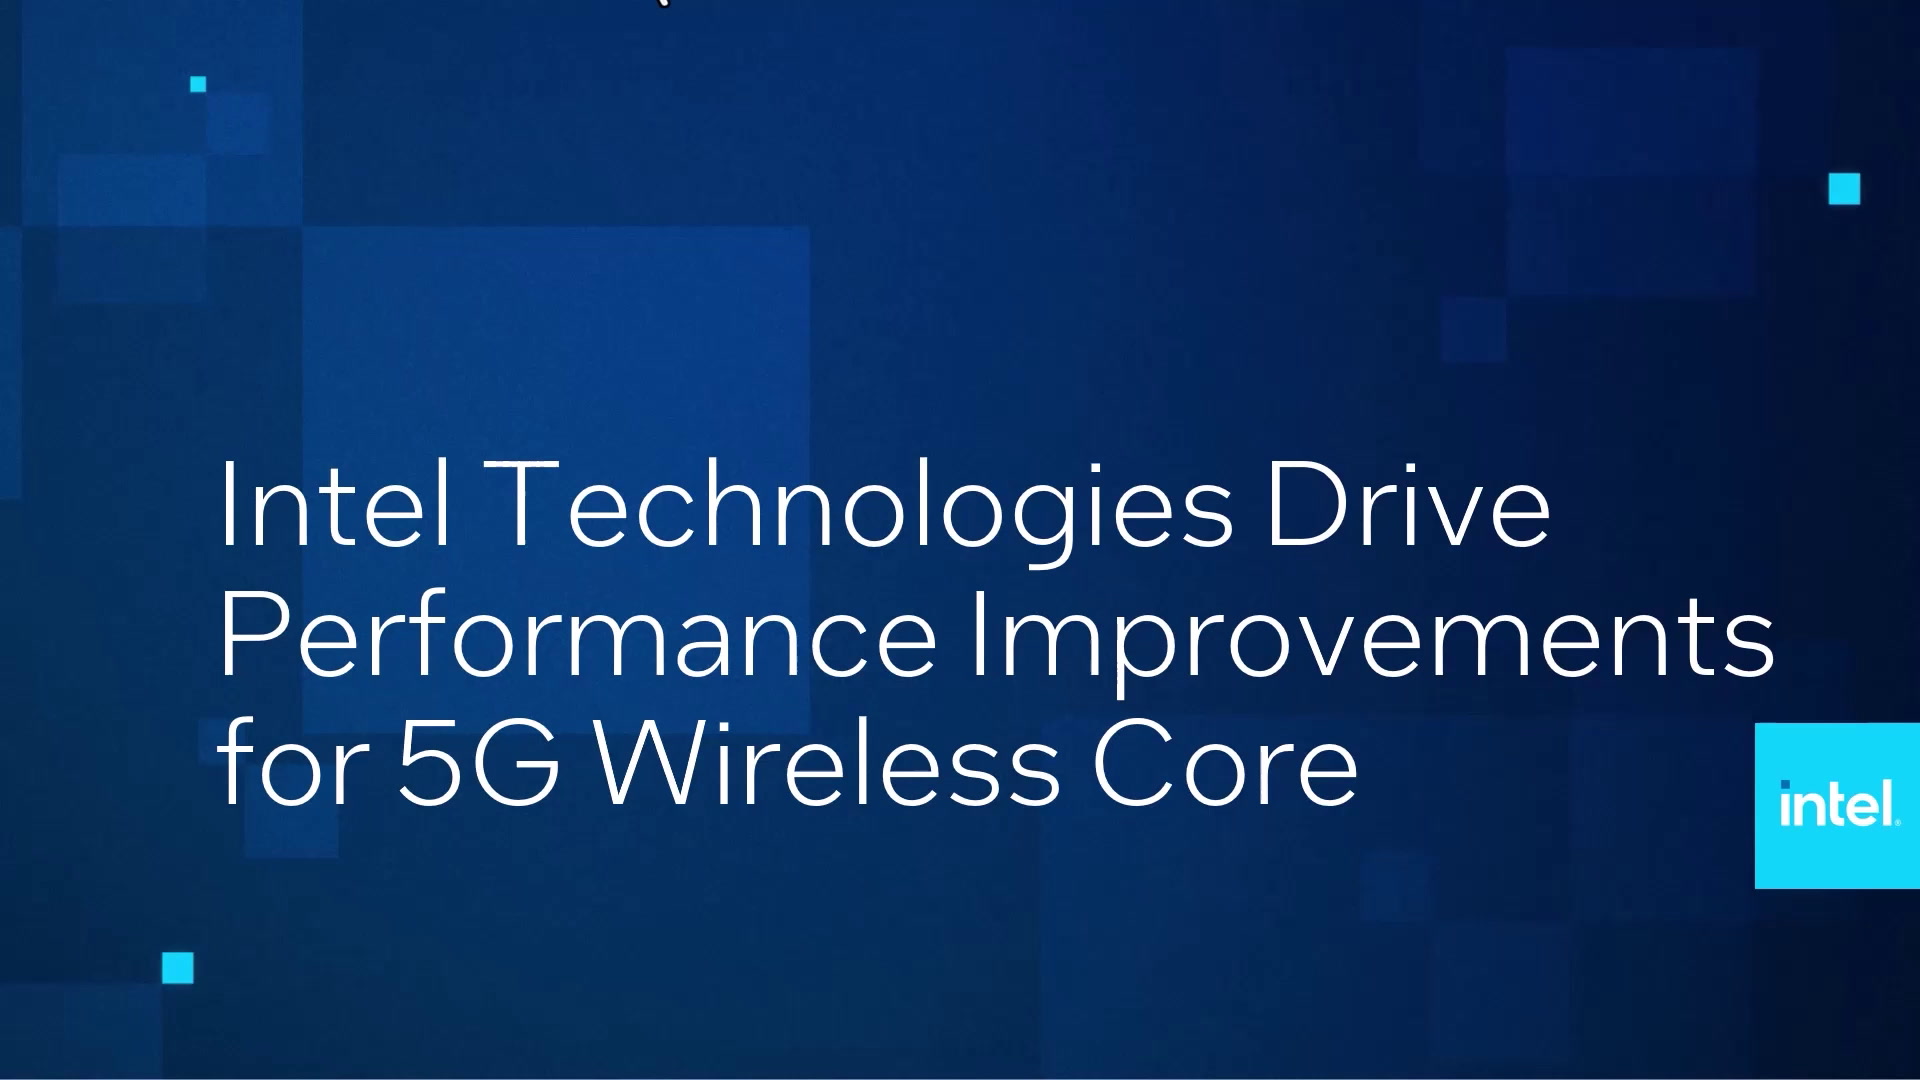  Intel Technologies Drive Performance Improvements for 5G Wireless Core